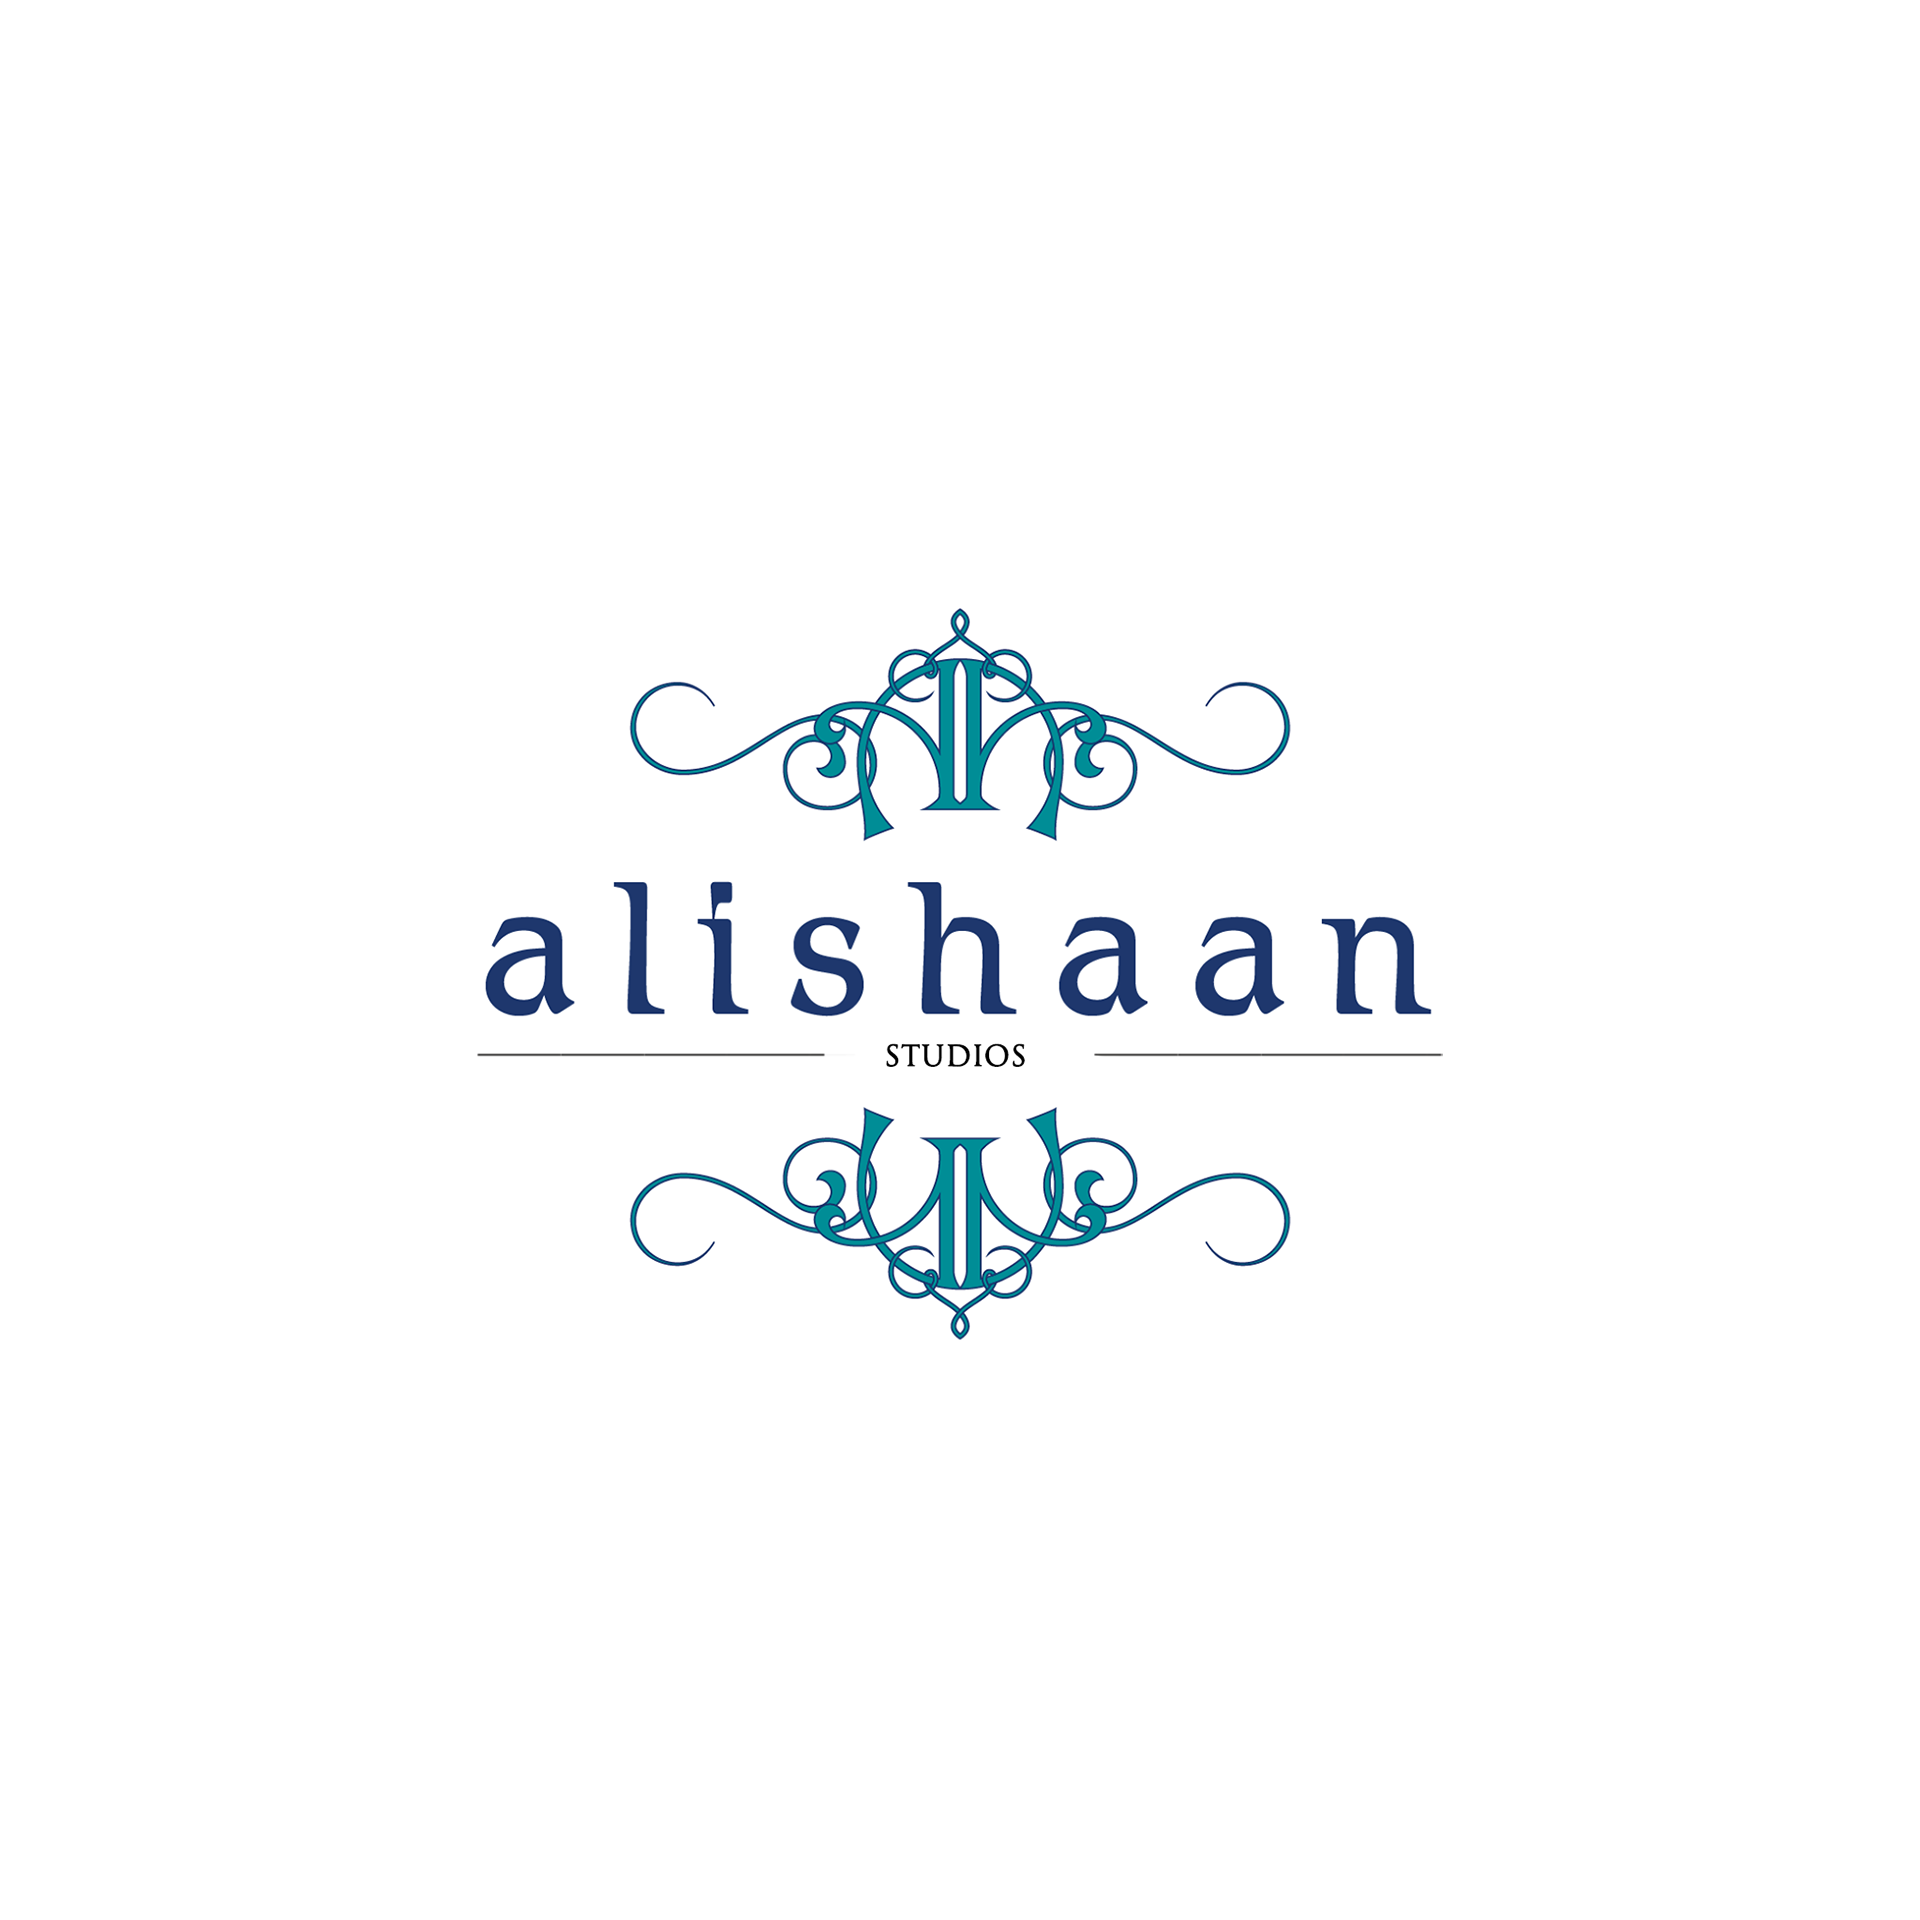 Alishan Projects :: Photos, videos, logos, illustrations and